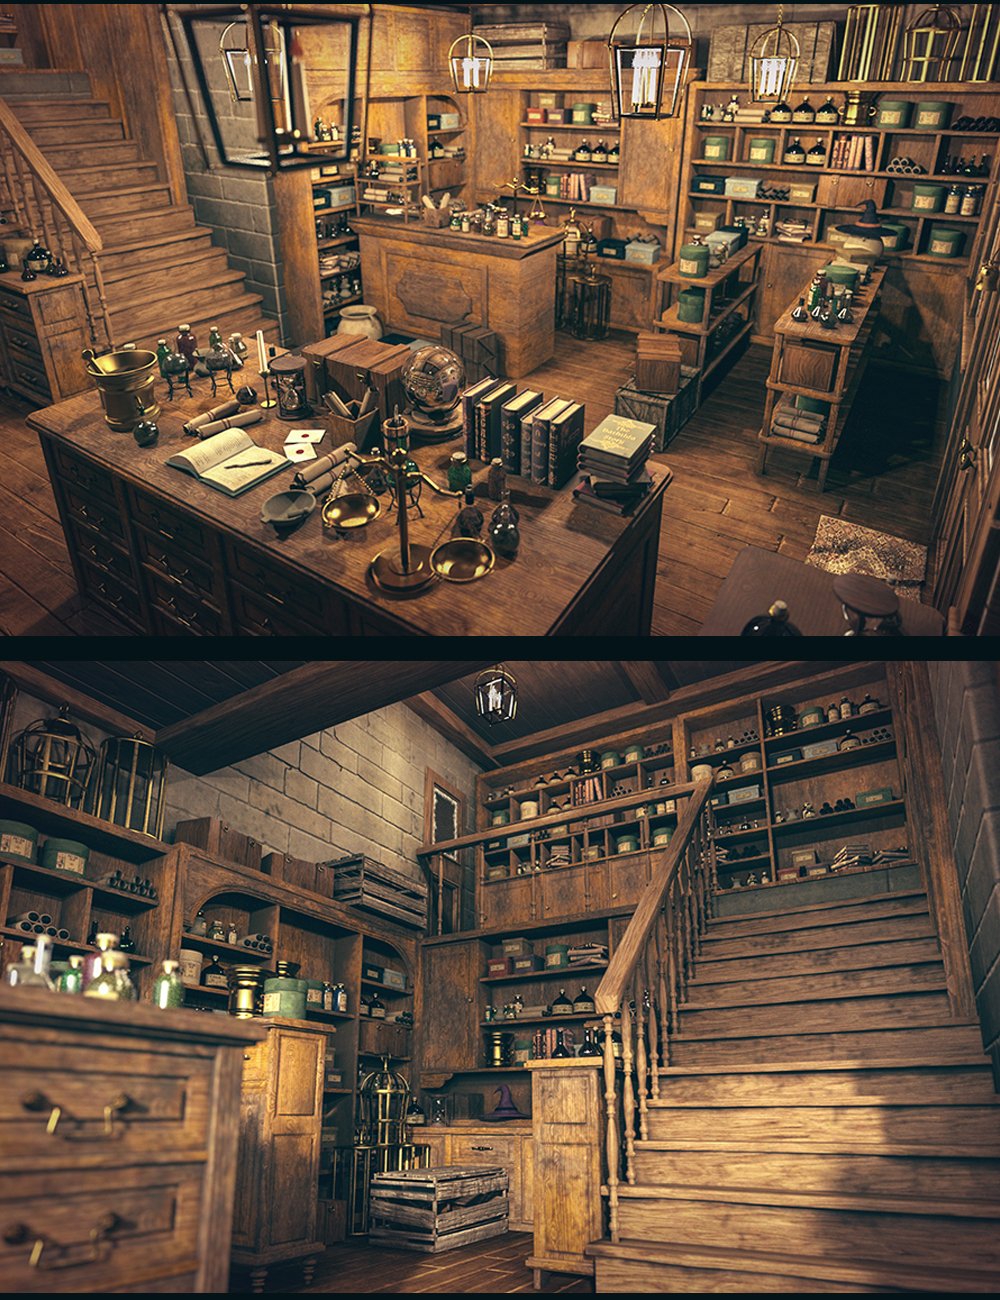 Magic Potion Shop